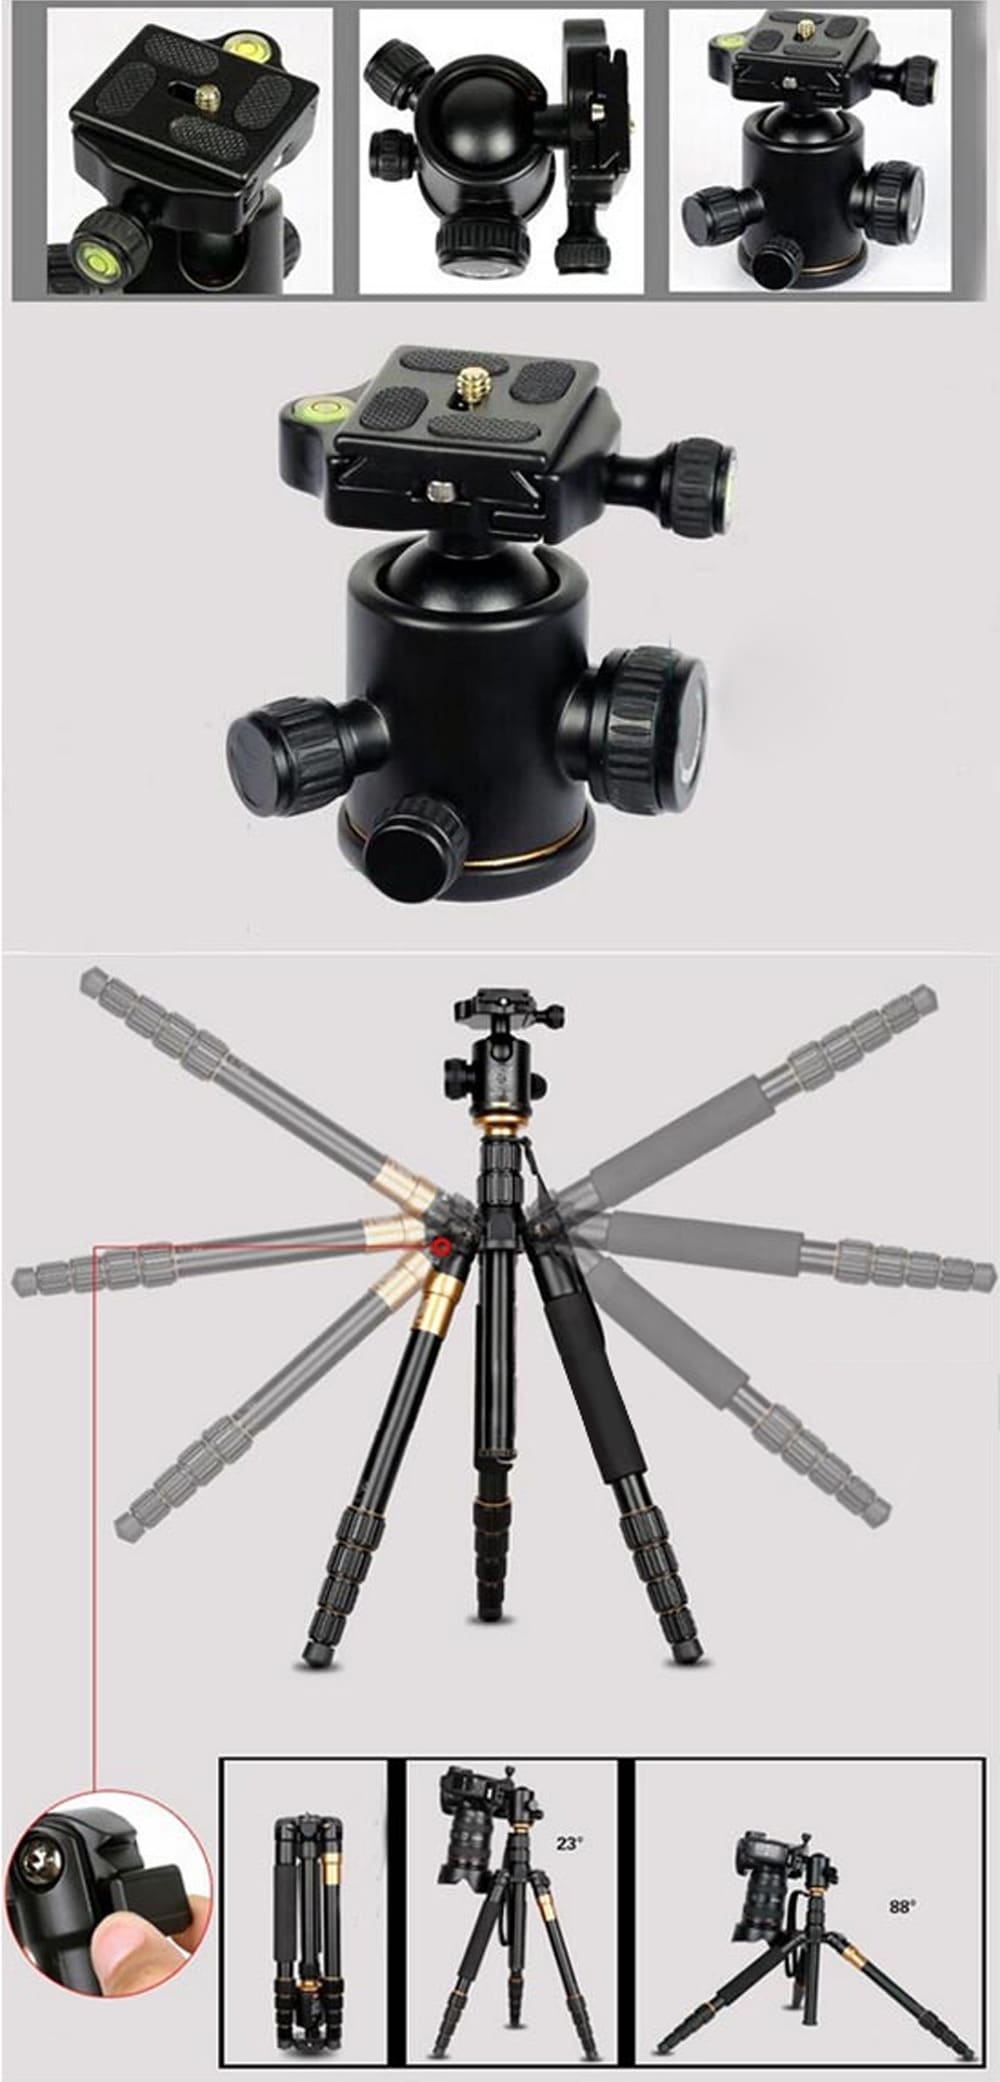 QZSD Q666 Camera Tripod 360 Degree Rotating Swivel Fluid Ball Head 1.5kg Load-Bearing Universal Accessory for DSLR DV Camcorder- Black